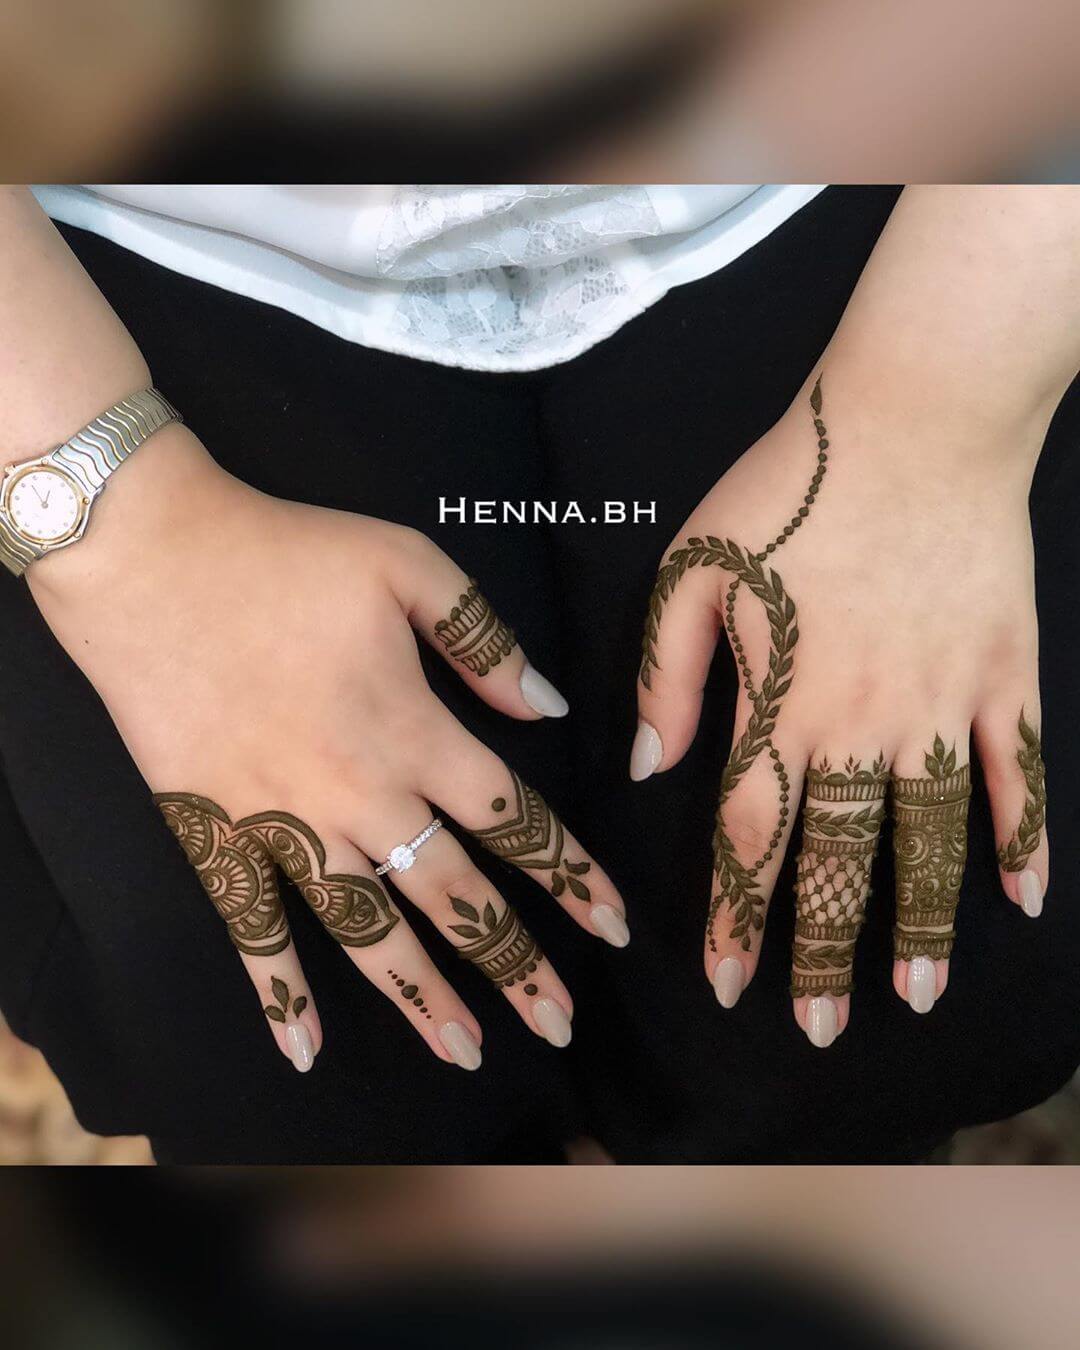 Royal Finger Mehndi Designs in Khafif Style (Back Side) - K4 Fashion